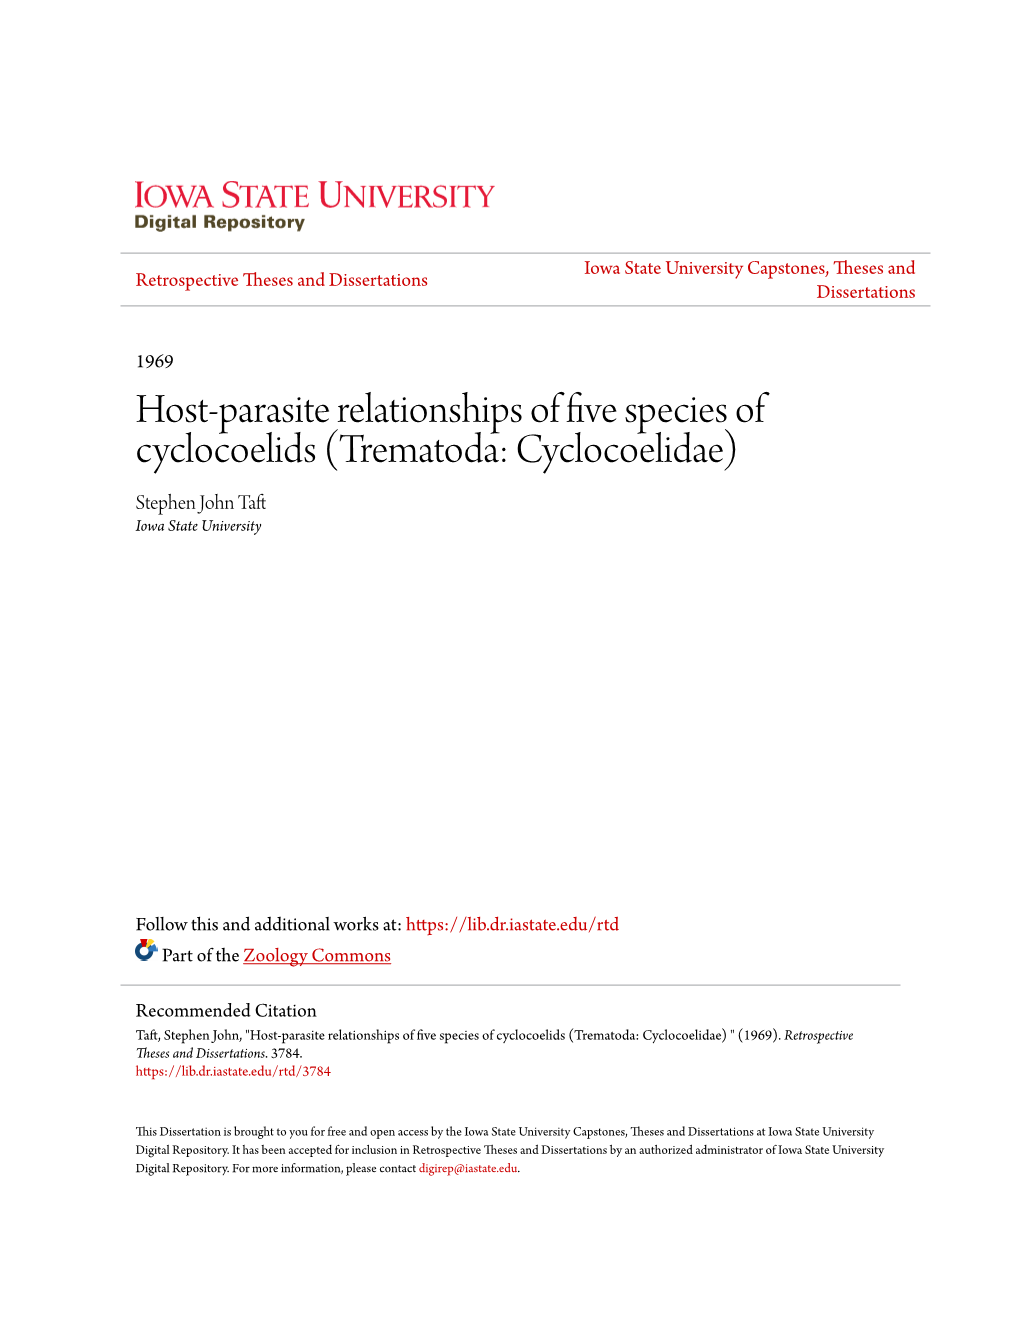 Host-Parasite Relationships of Five Species of Cyclocoelids (Trematoda: Cyclocoelidae) Stephen John Taft Iowa State University